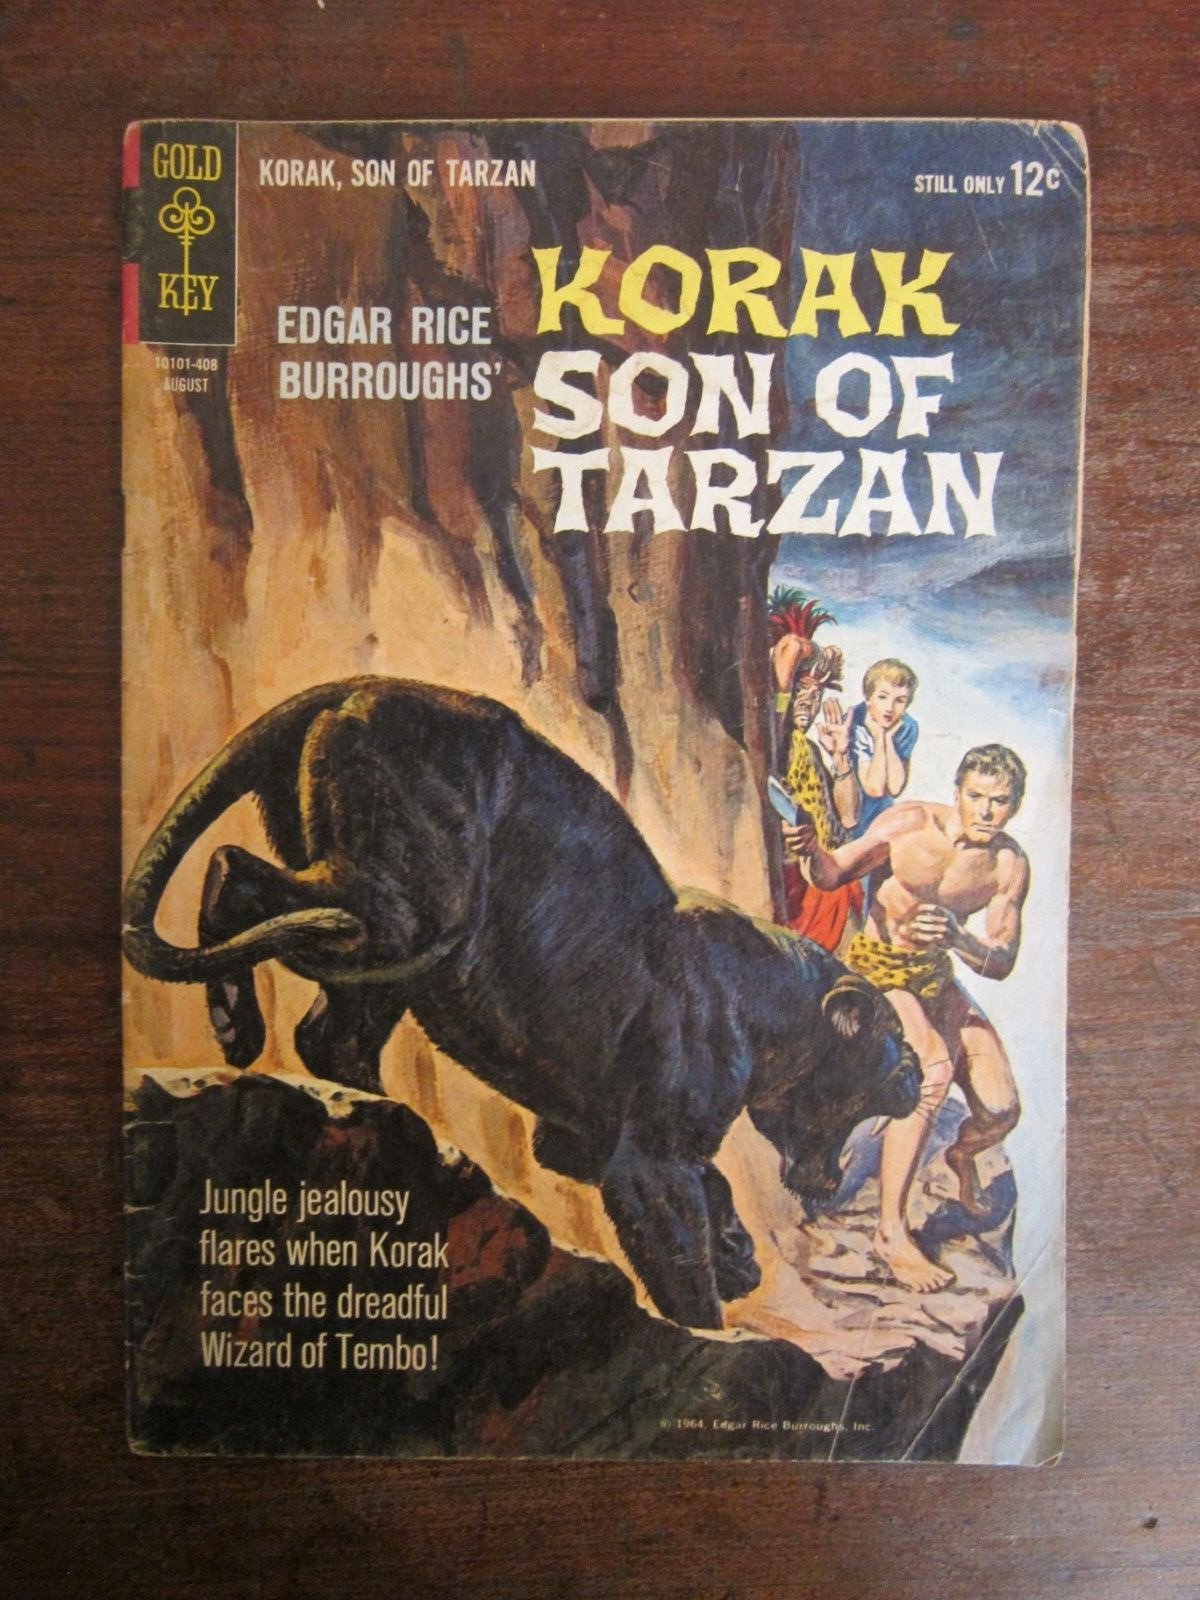 Korak, Son of Tarzan #4 - Edgar Rice Burroughs - Gold Key - Silver Age